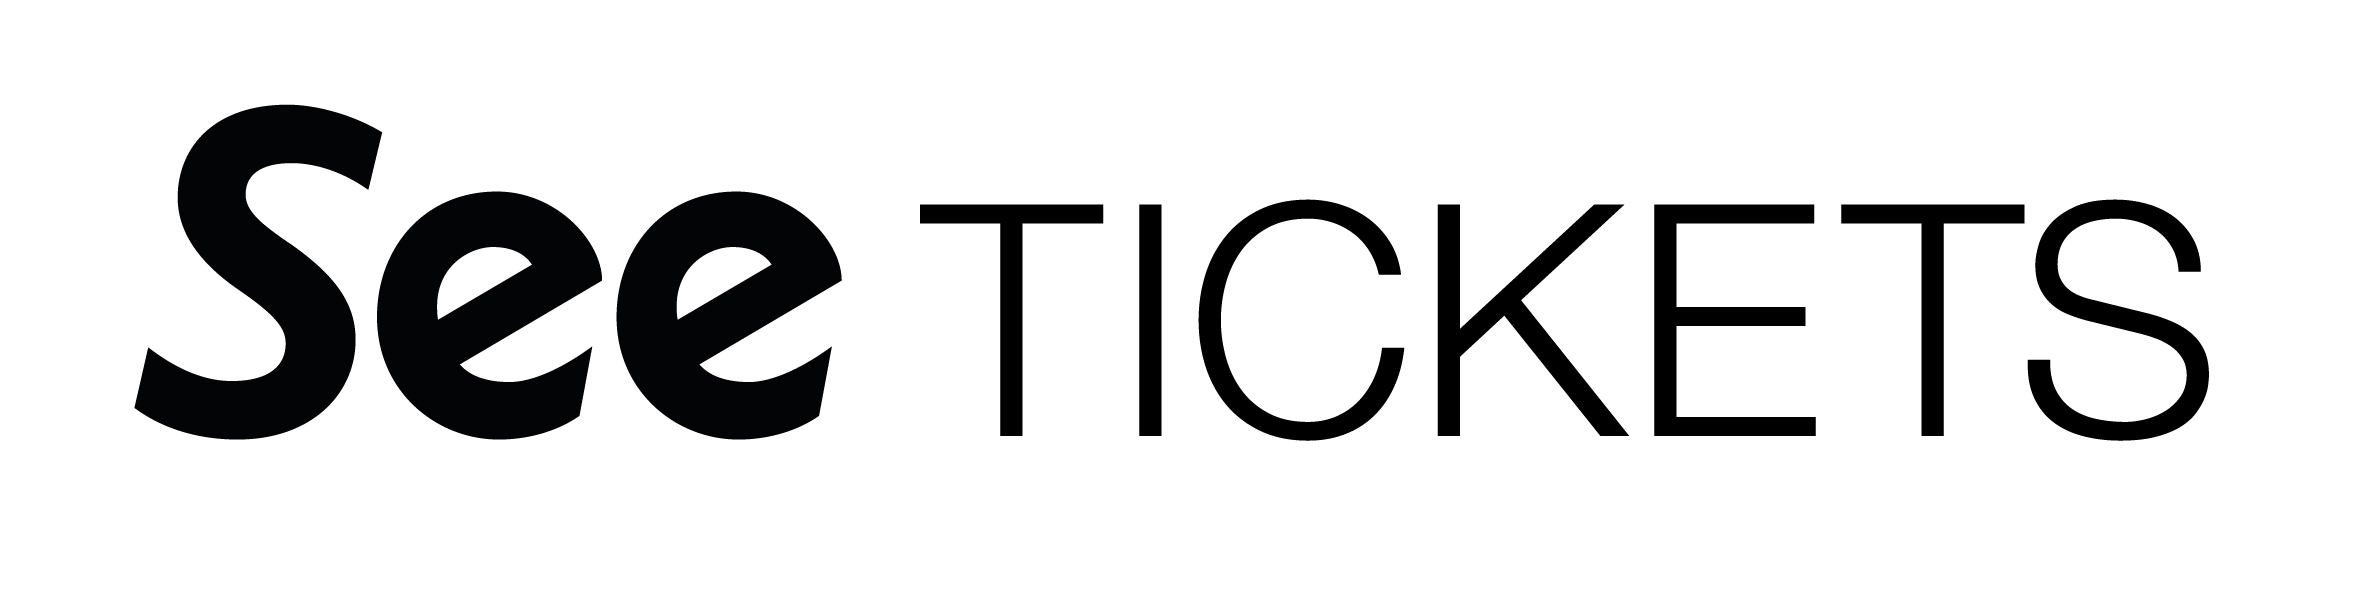 SEE TICKETS Logo Black